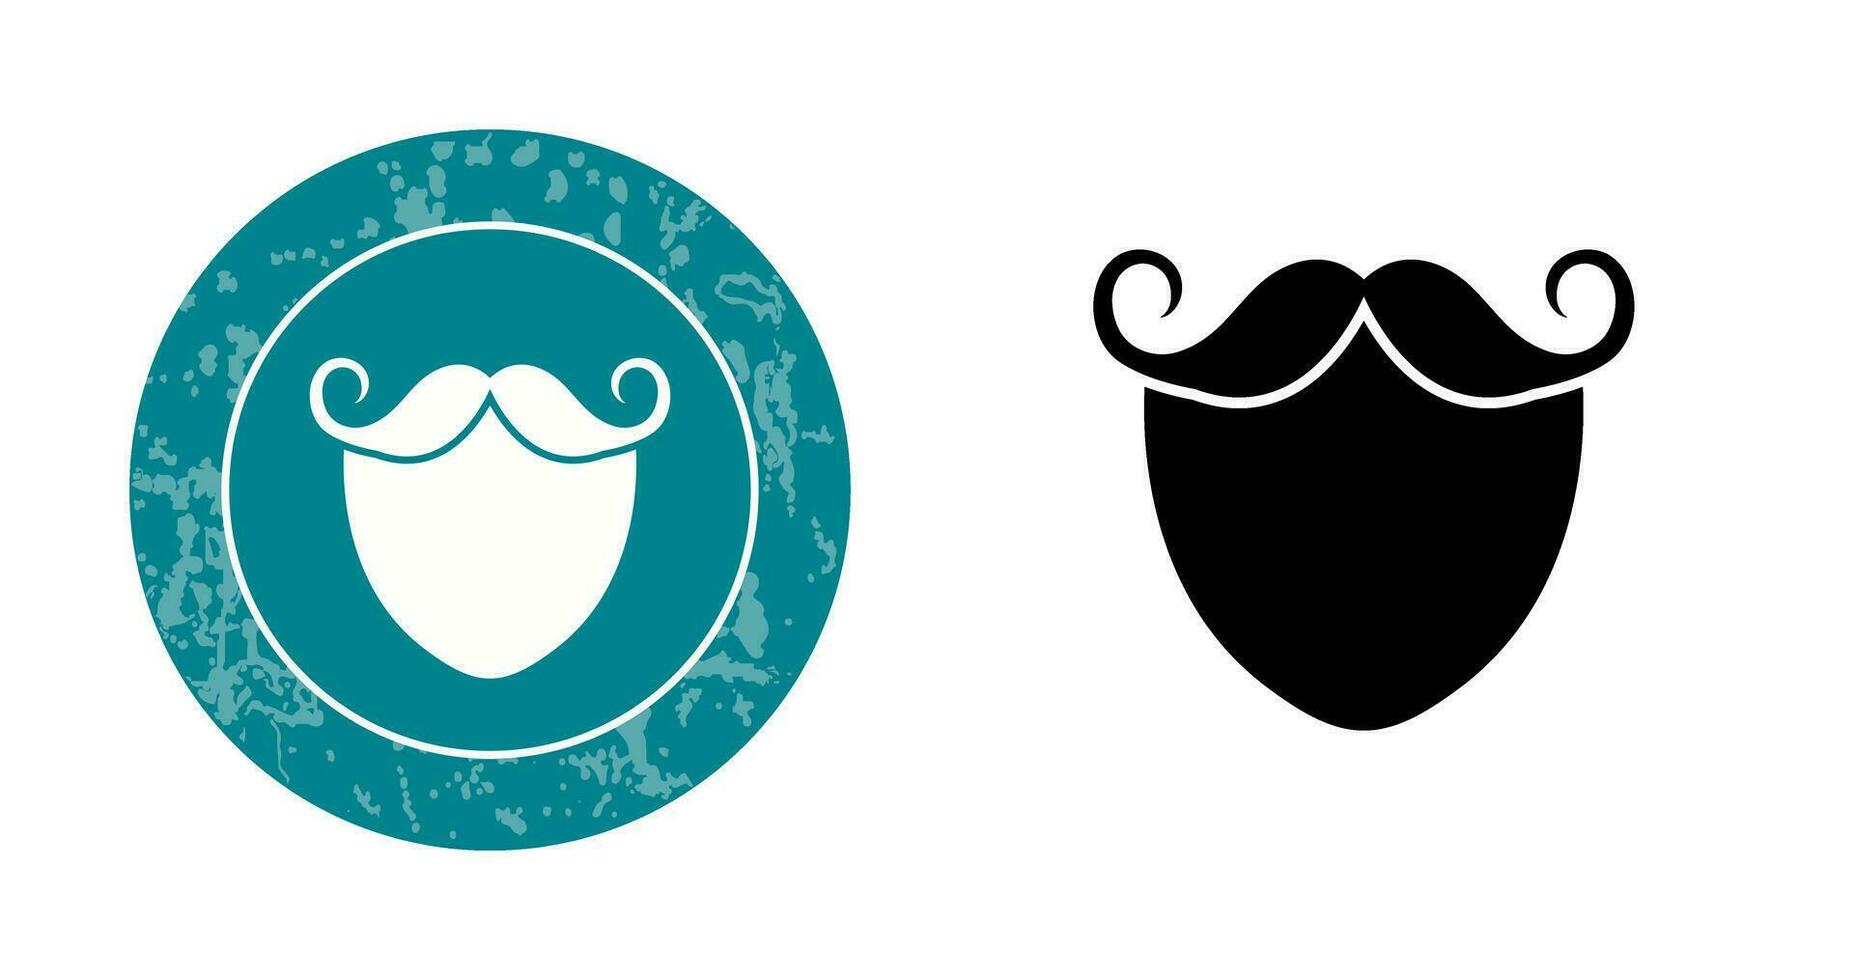 Beard and Moustache Vector Icon